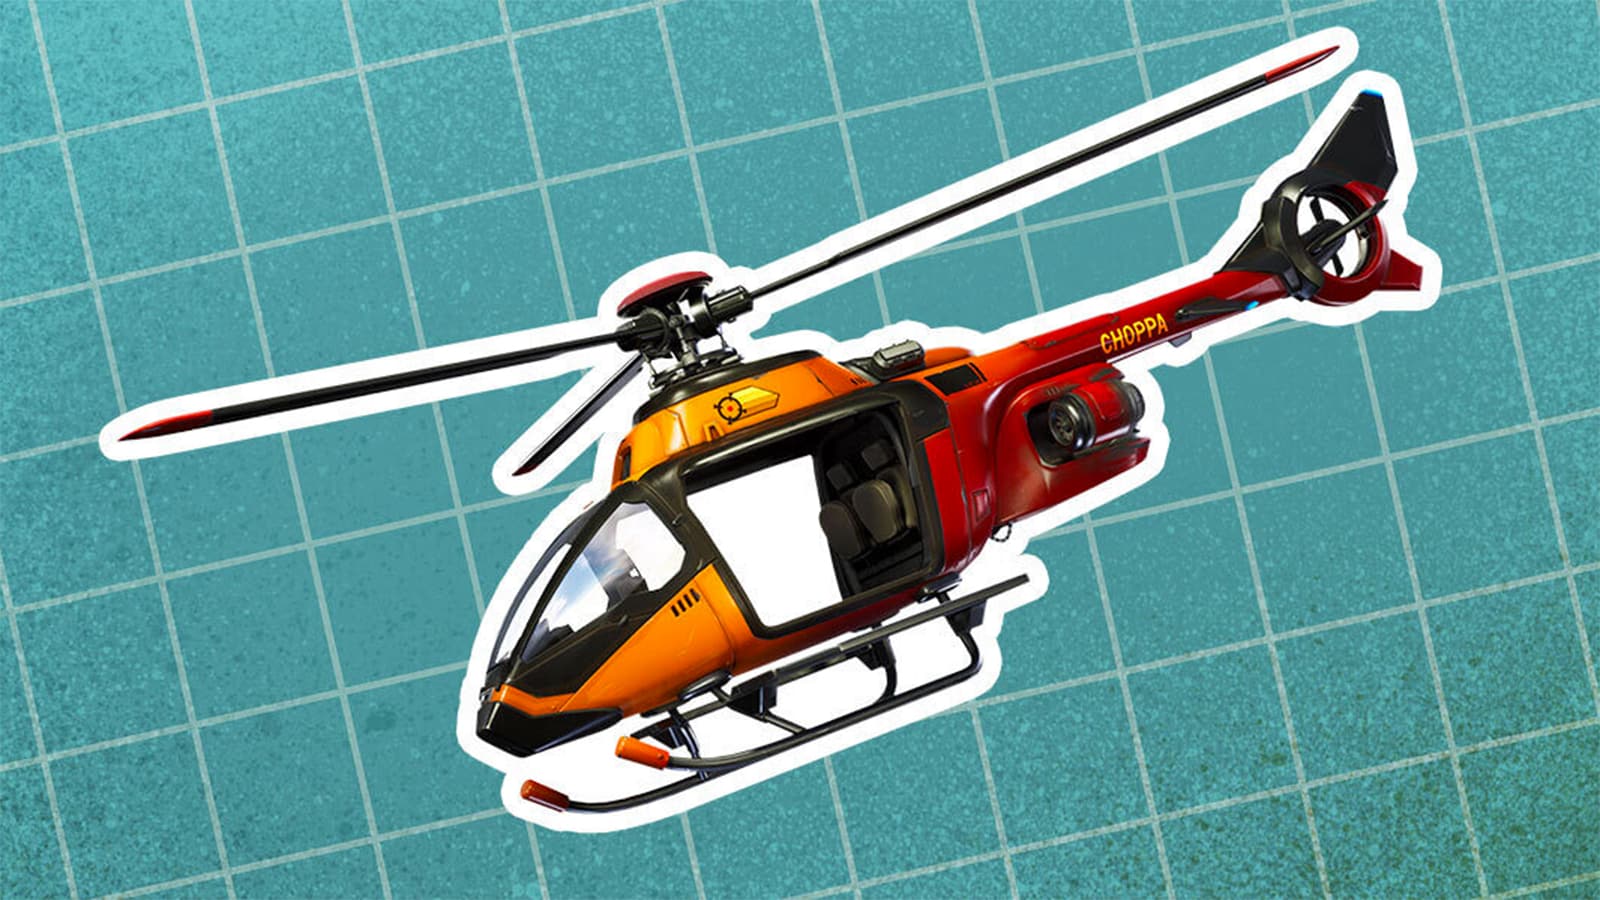 A Choppa helicopter in Fortnite 